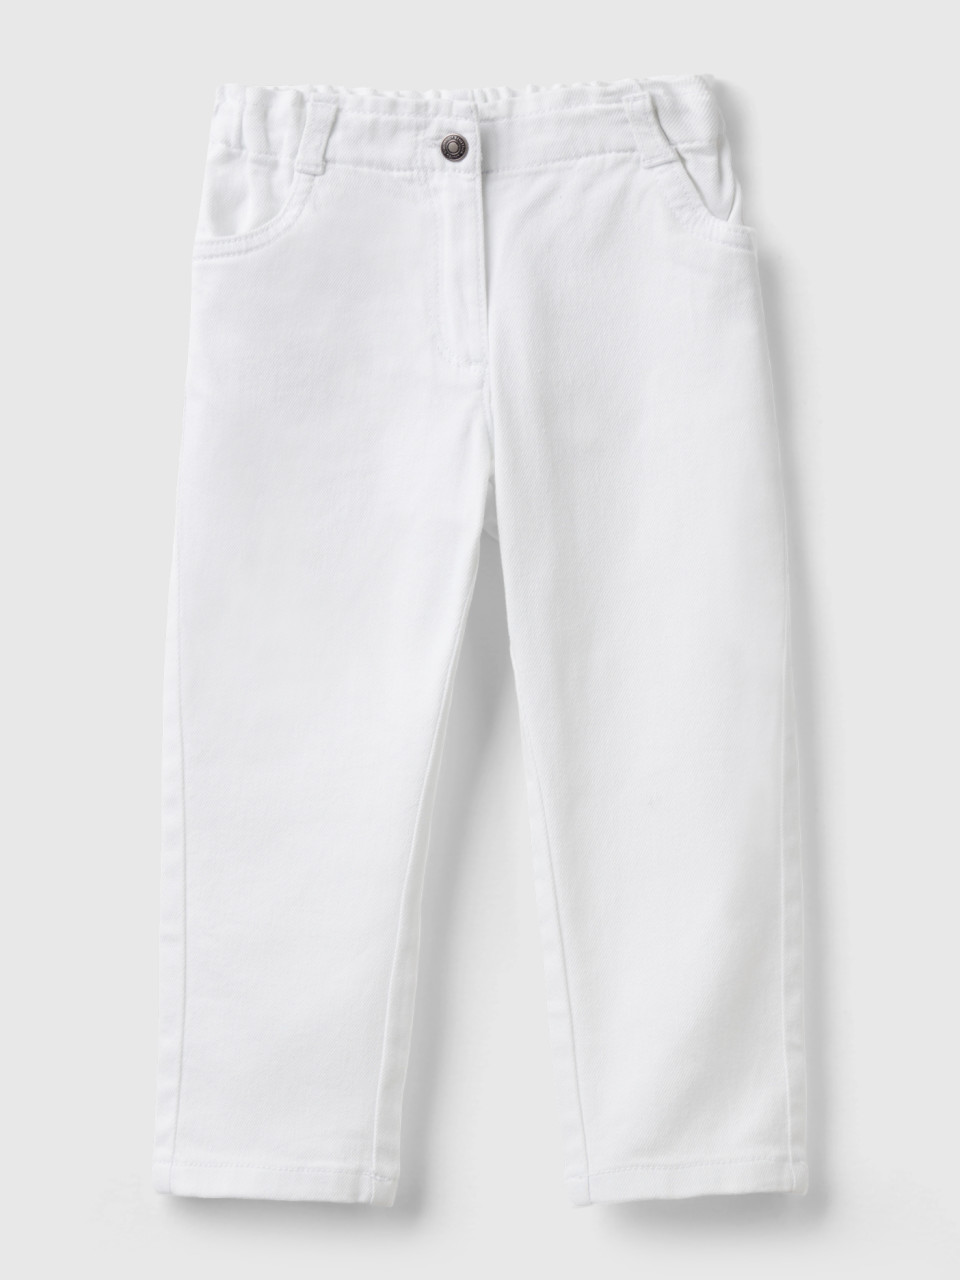 Benetton, Paperbag Trousers, White, Kids